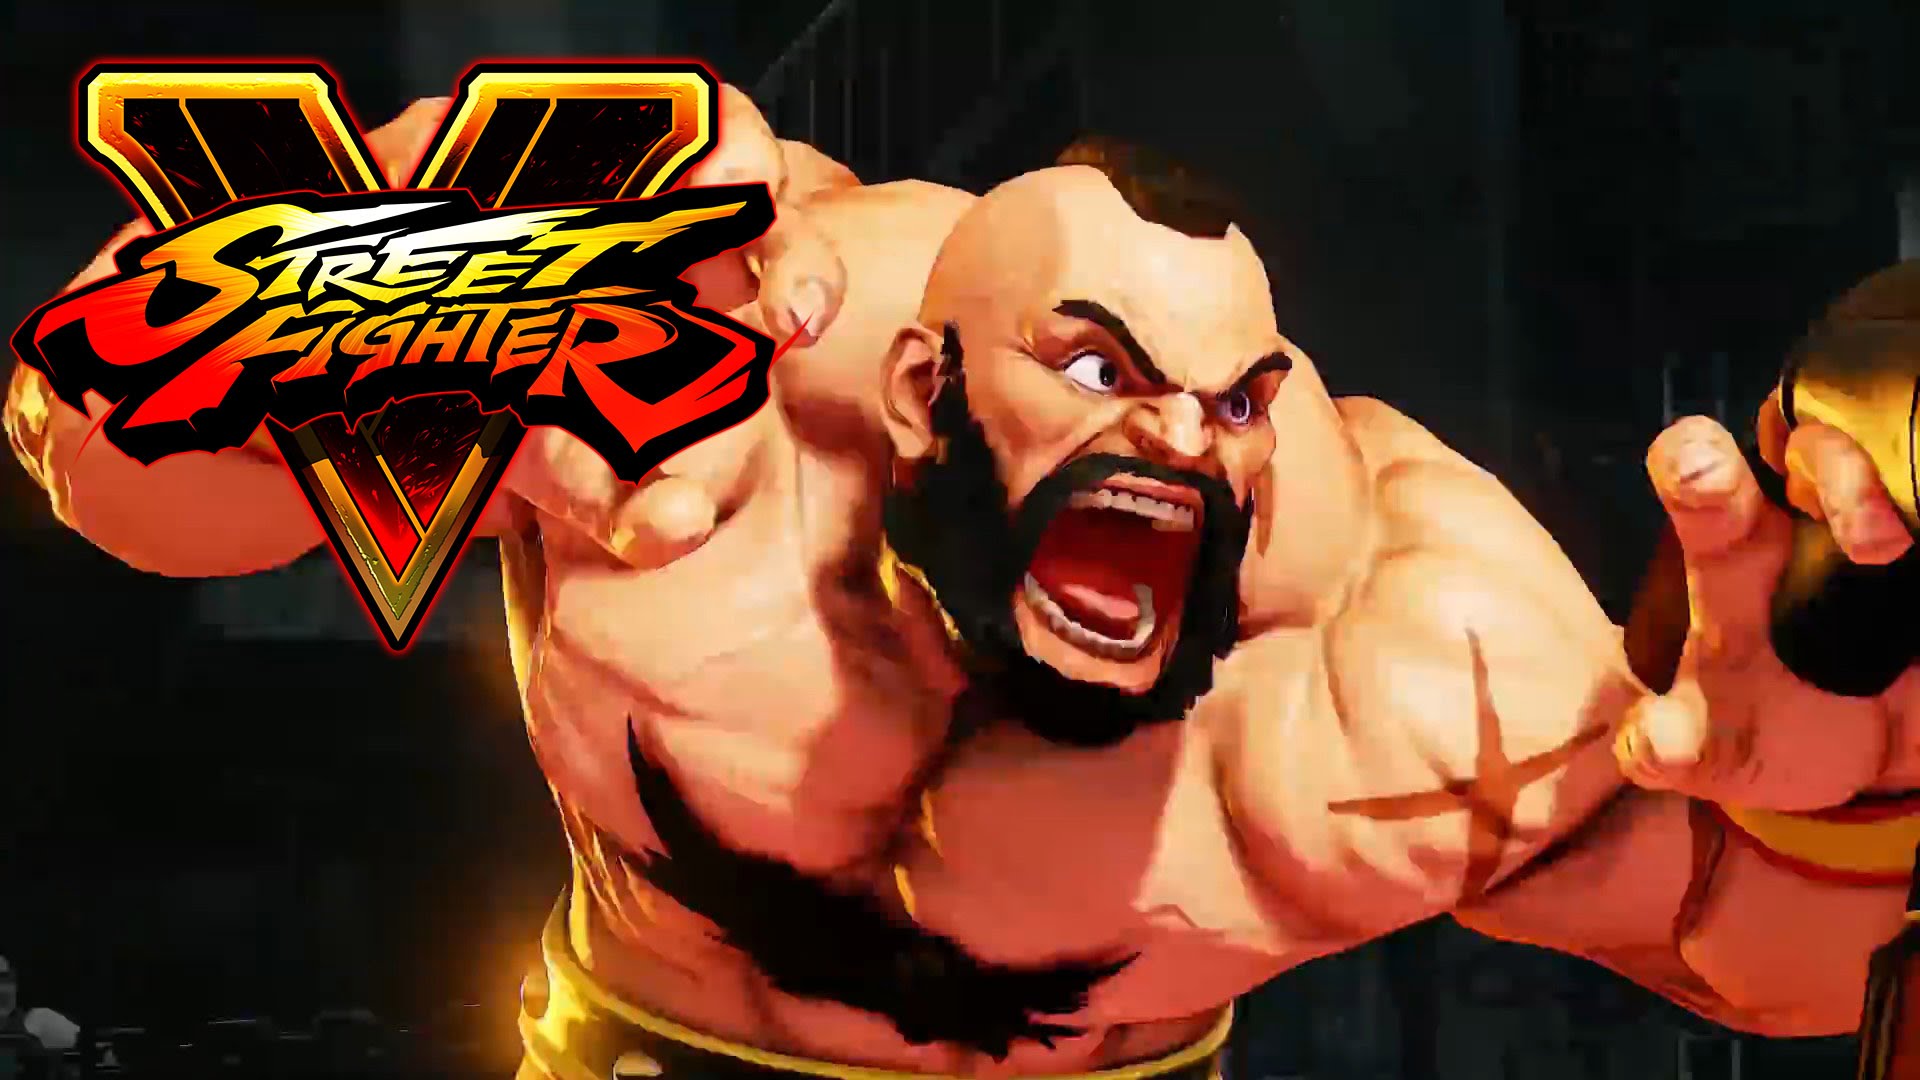 Street Fighter V - Zangief Reveal Trailer 1080p 60fps - YouTube